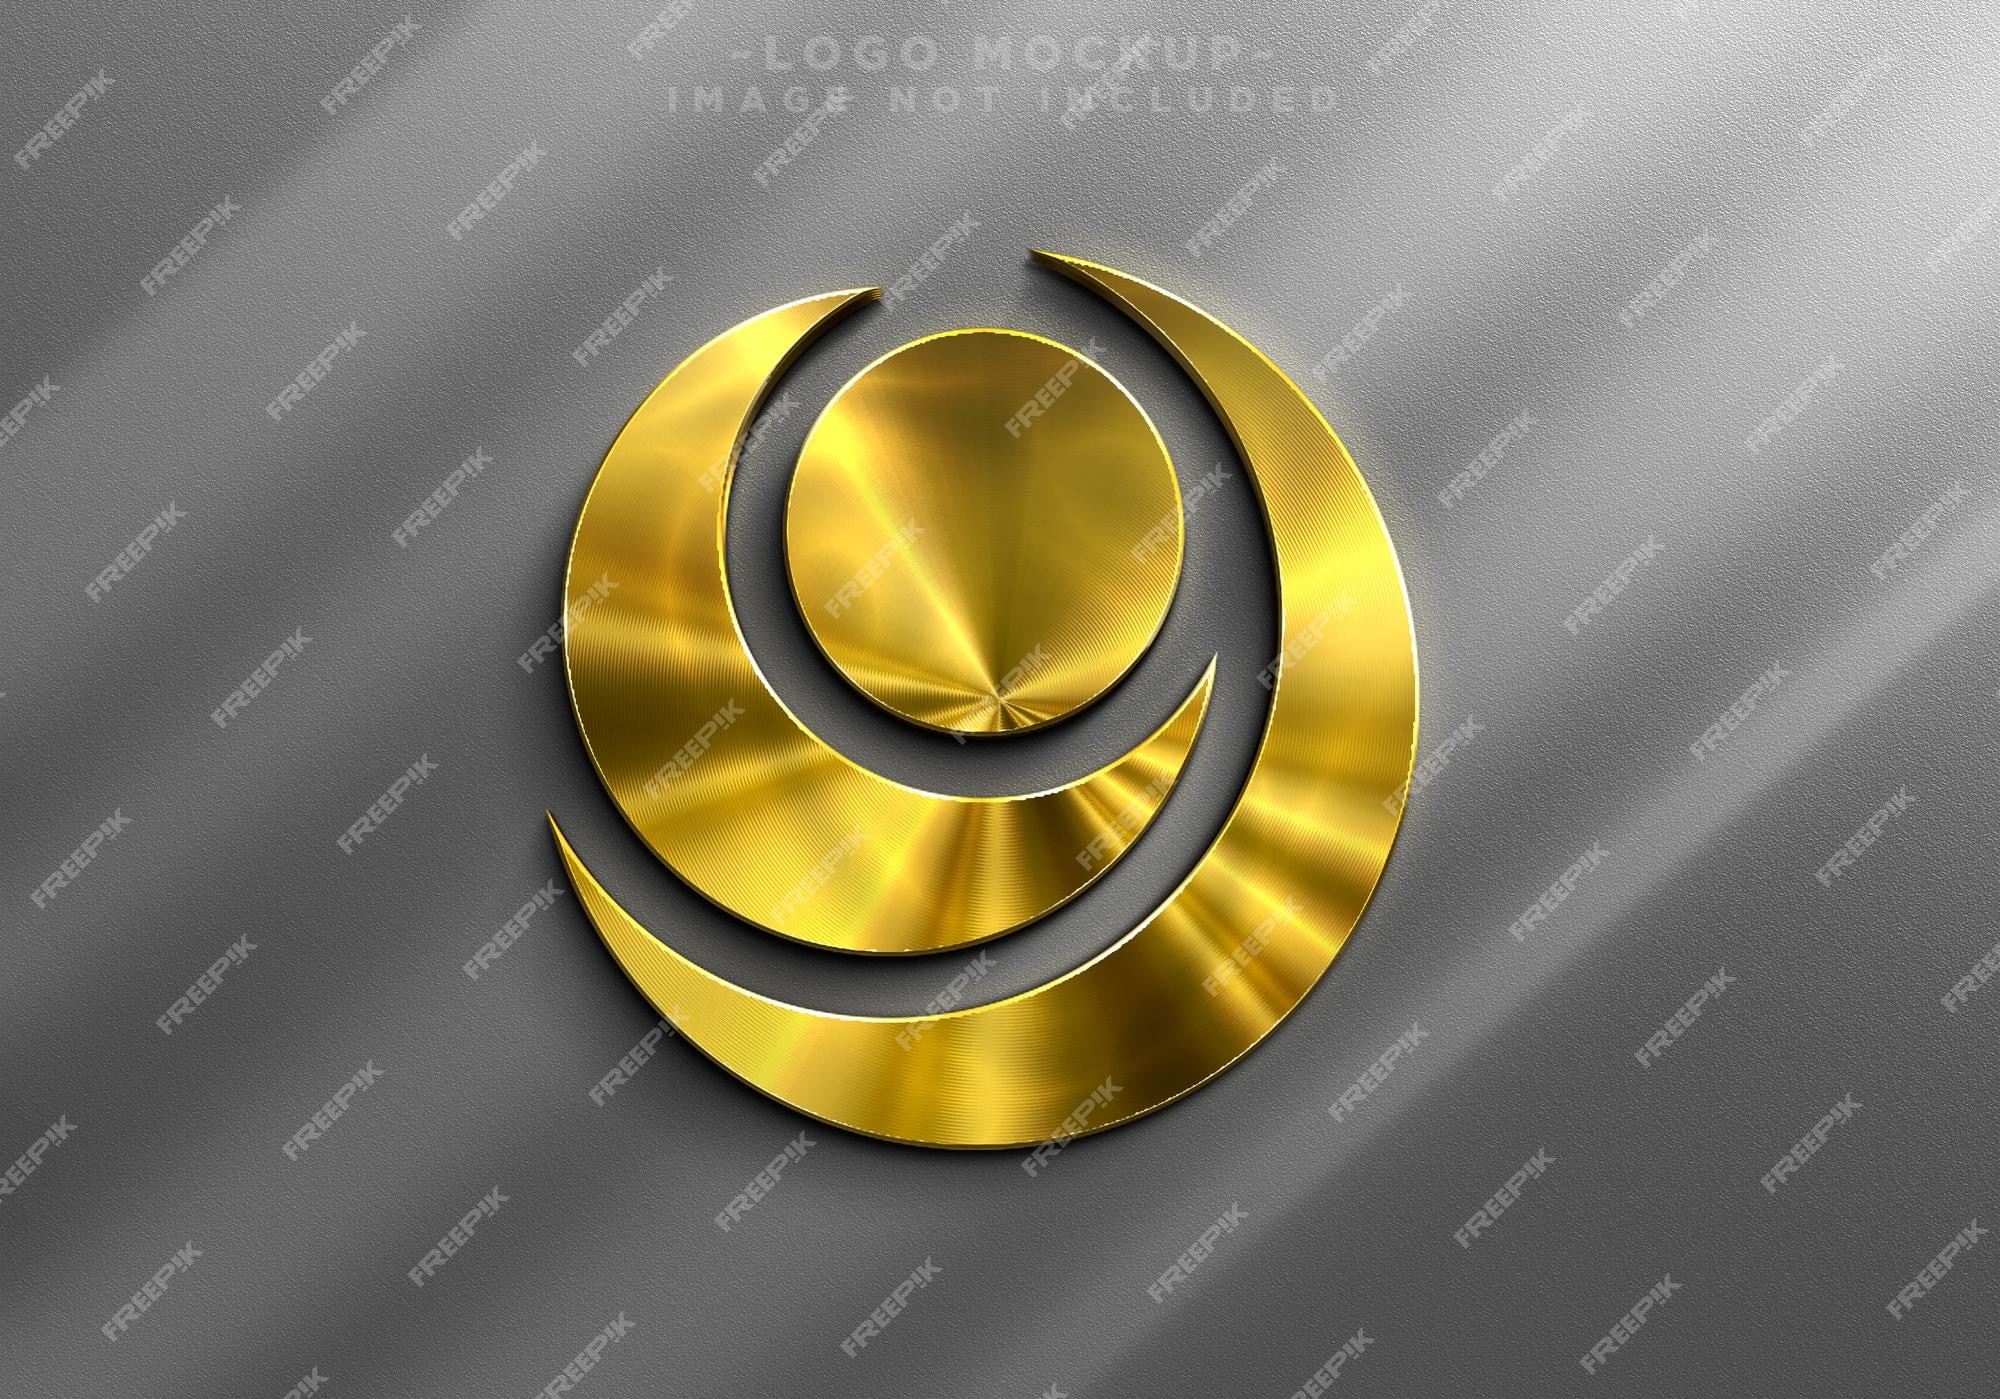 Premium PSD | Realistic golden logo mockup